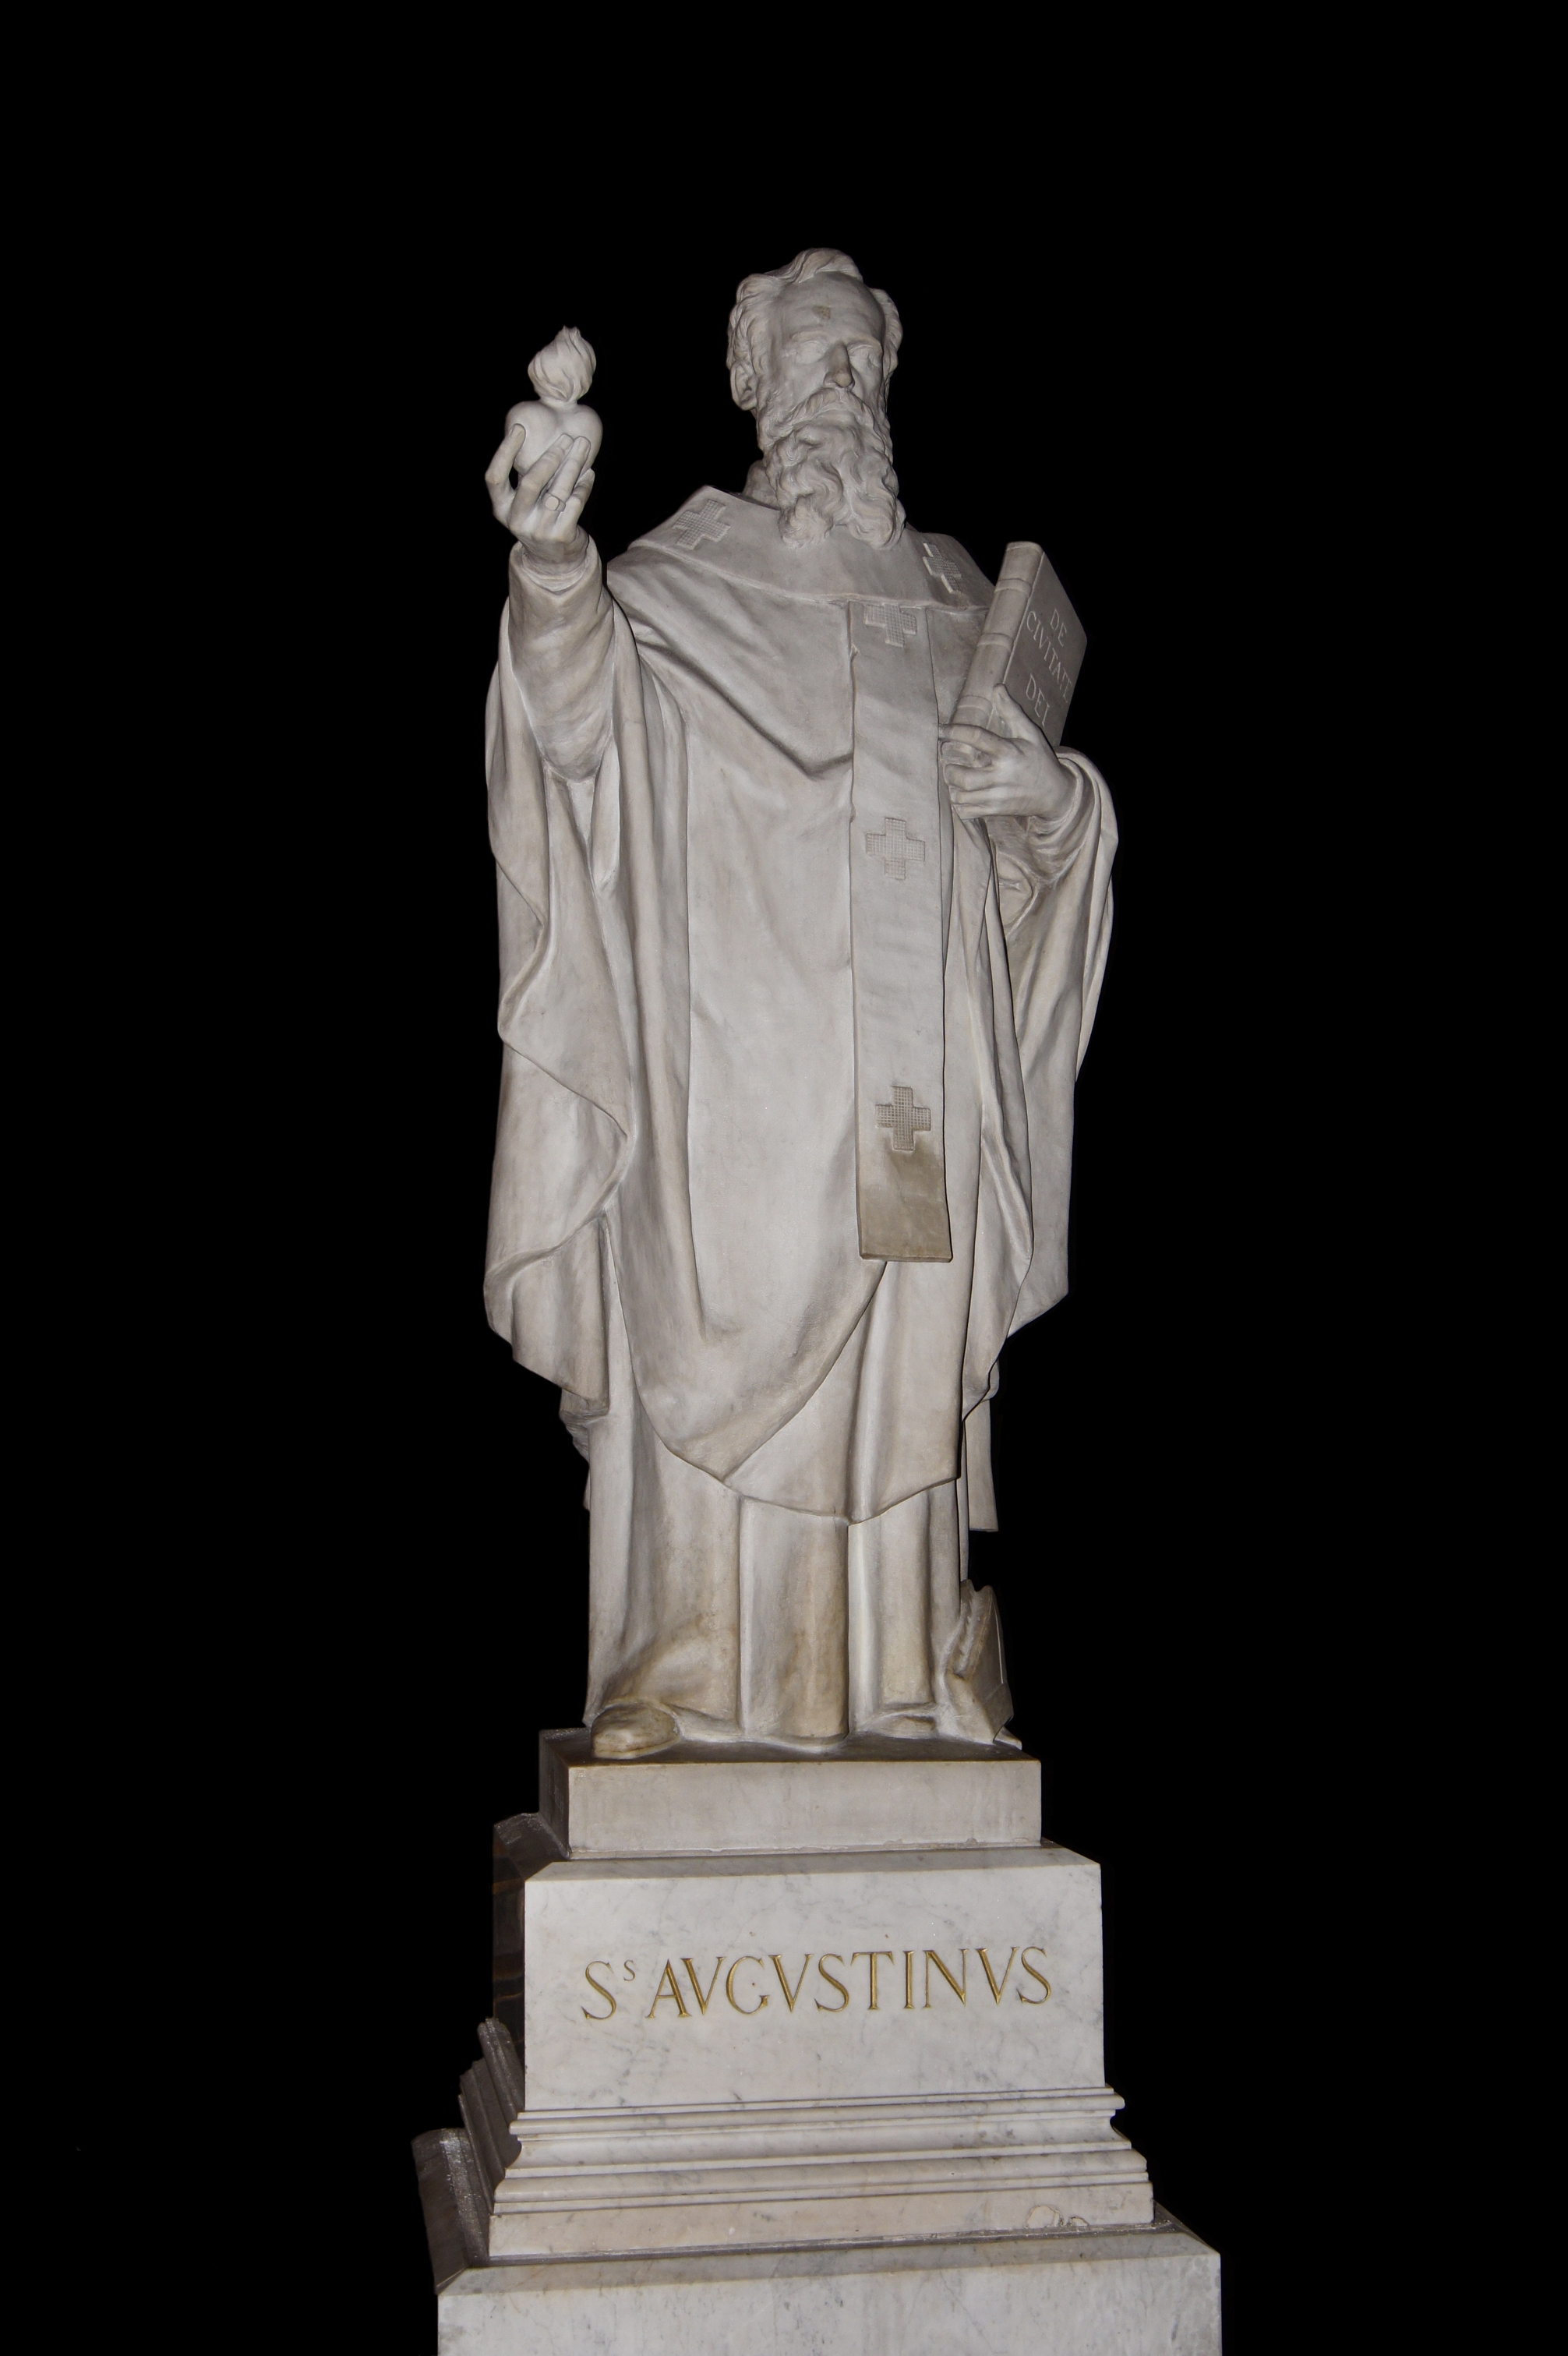 St Augustinus in the St Augustin Church, Paris